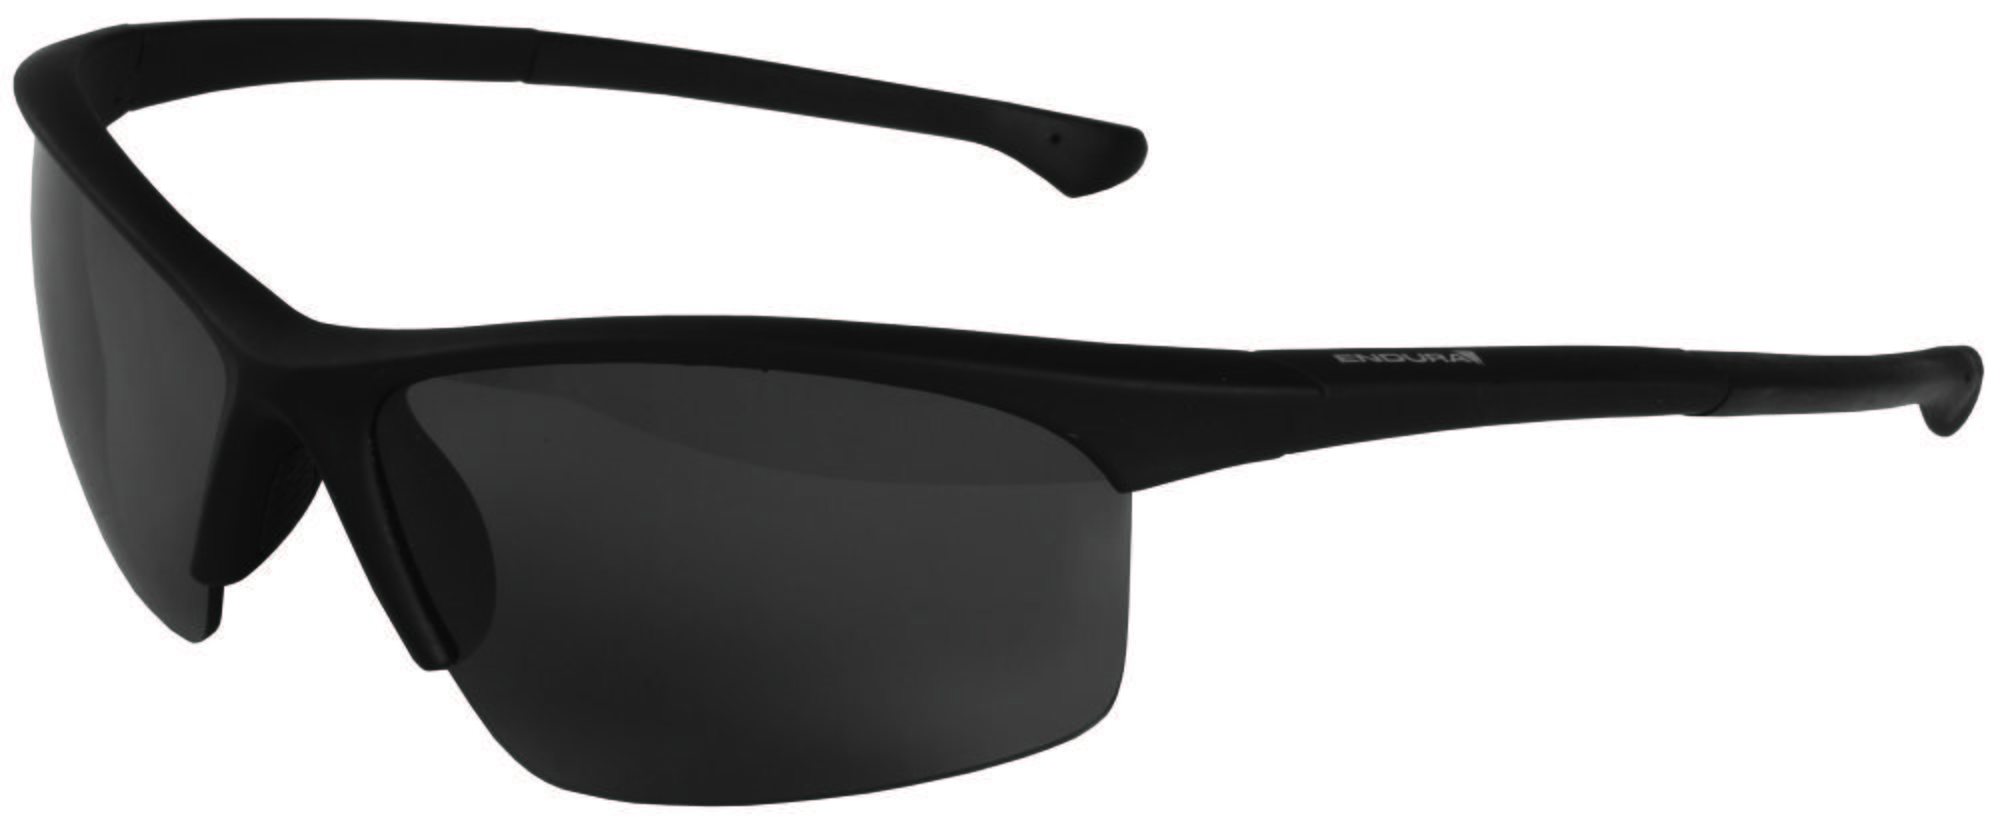 Endura Stingray Sunglasses - Black